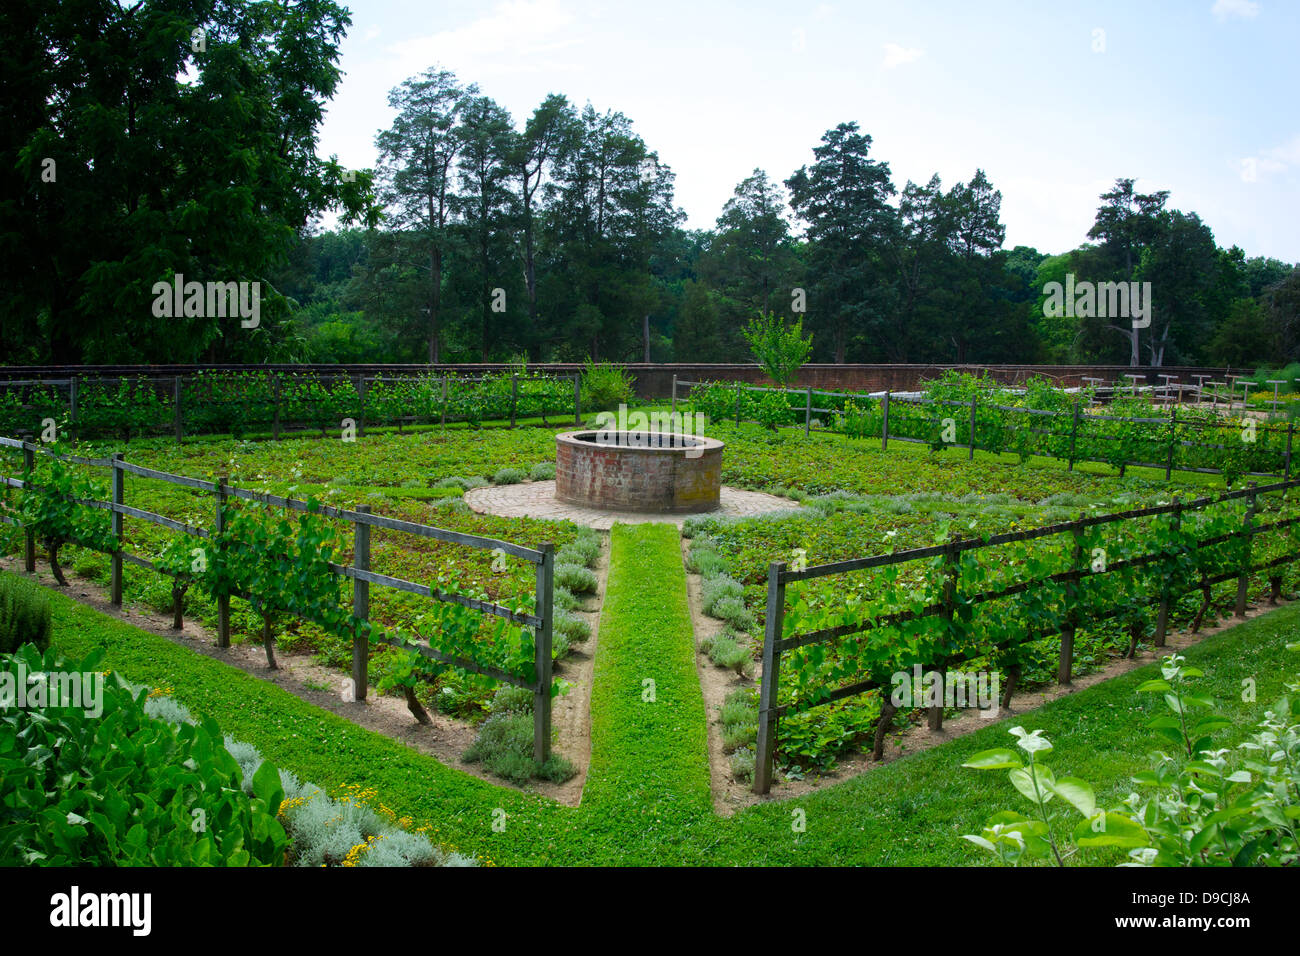 Grüne Gemüsegarten am Mount Washington Mount Vernon Plantage in Virginia. Stockfoto